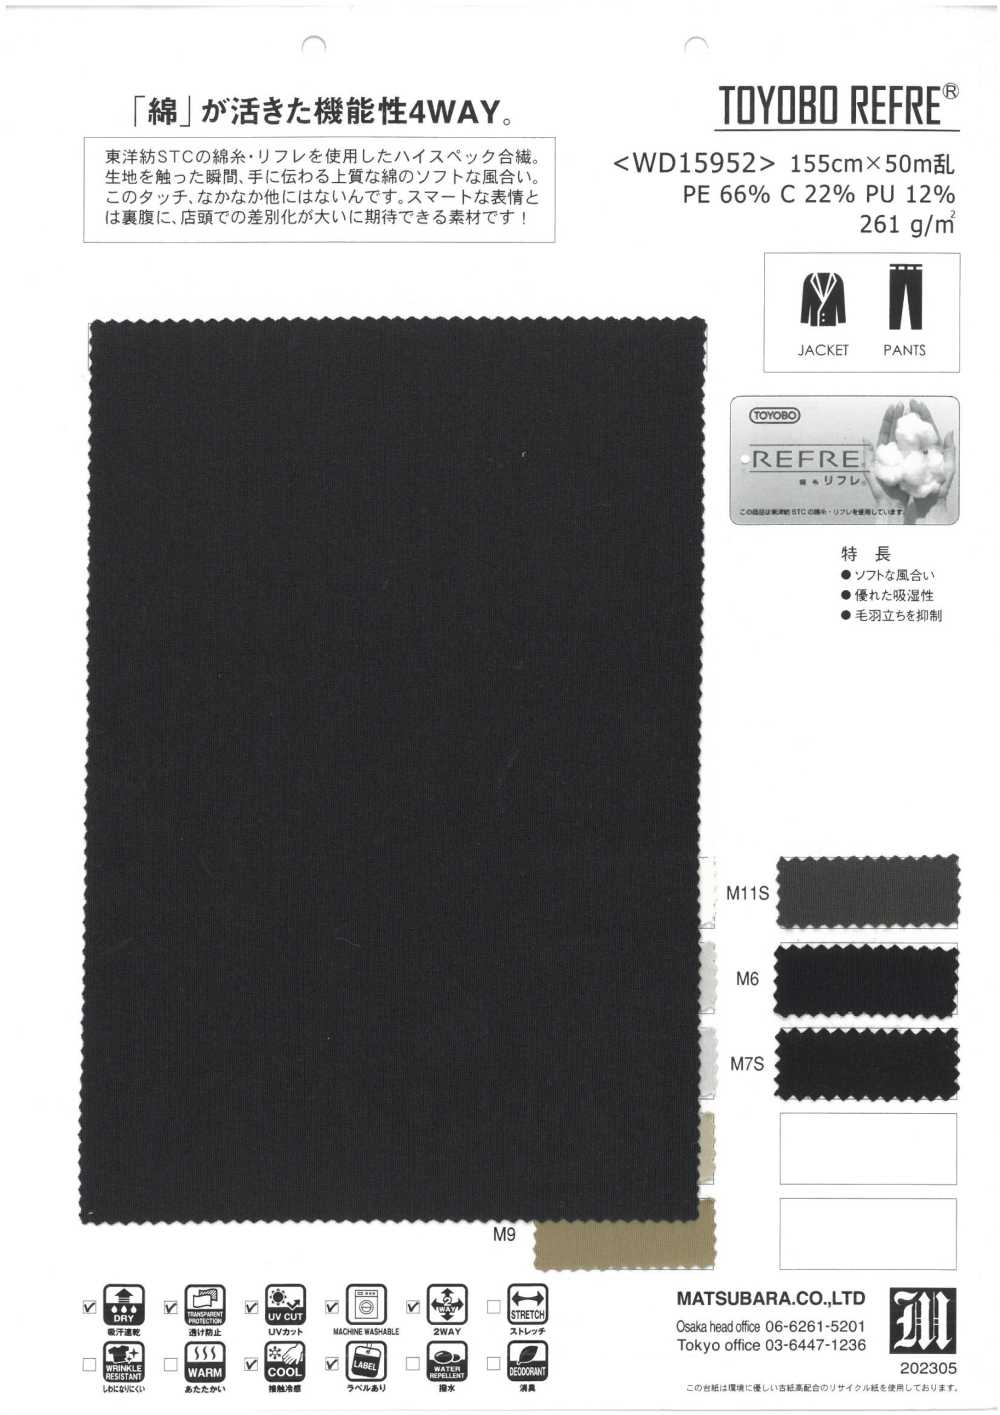 WD15952 TOYOBO REFRE®[Textile / Fabric] Matsubara